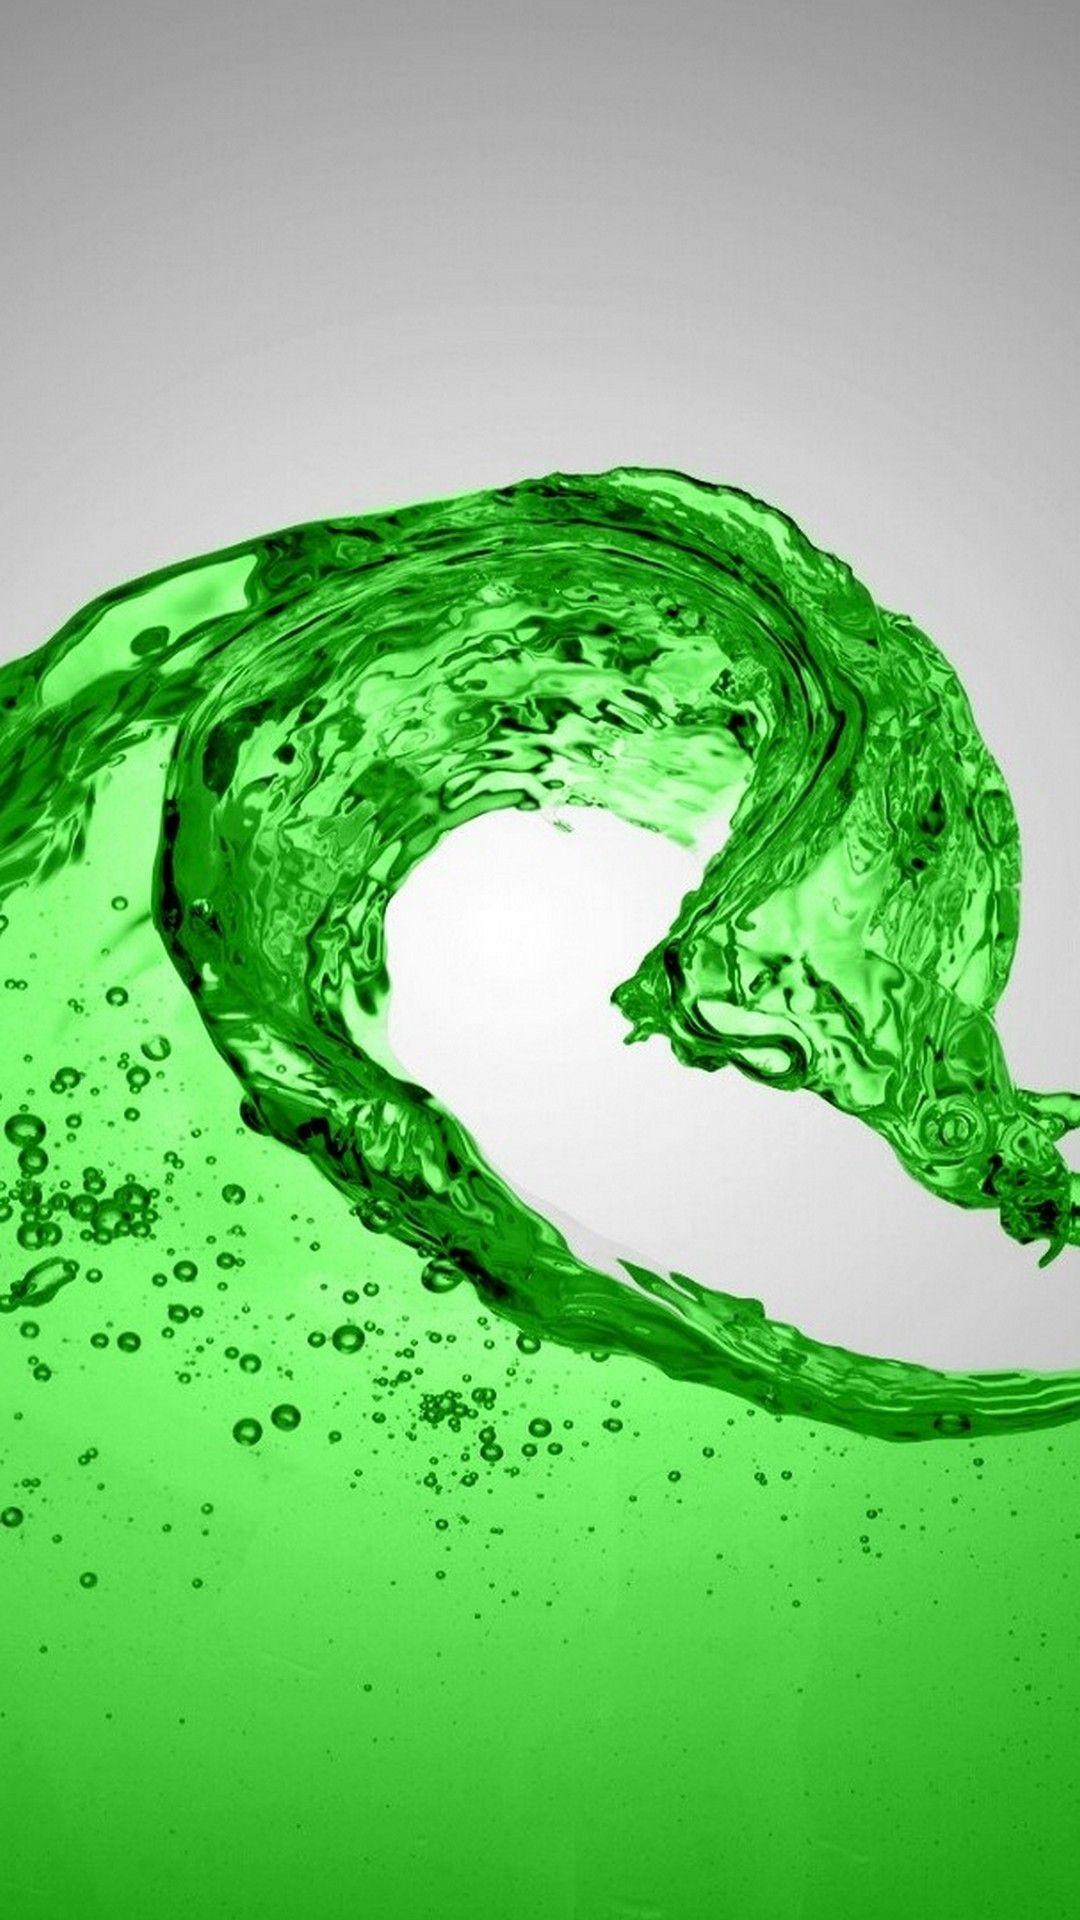 Milky Green Liquid Wallpaper iPhone X iPhone Wallpaper